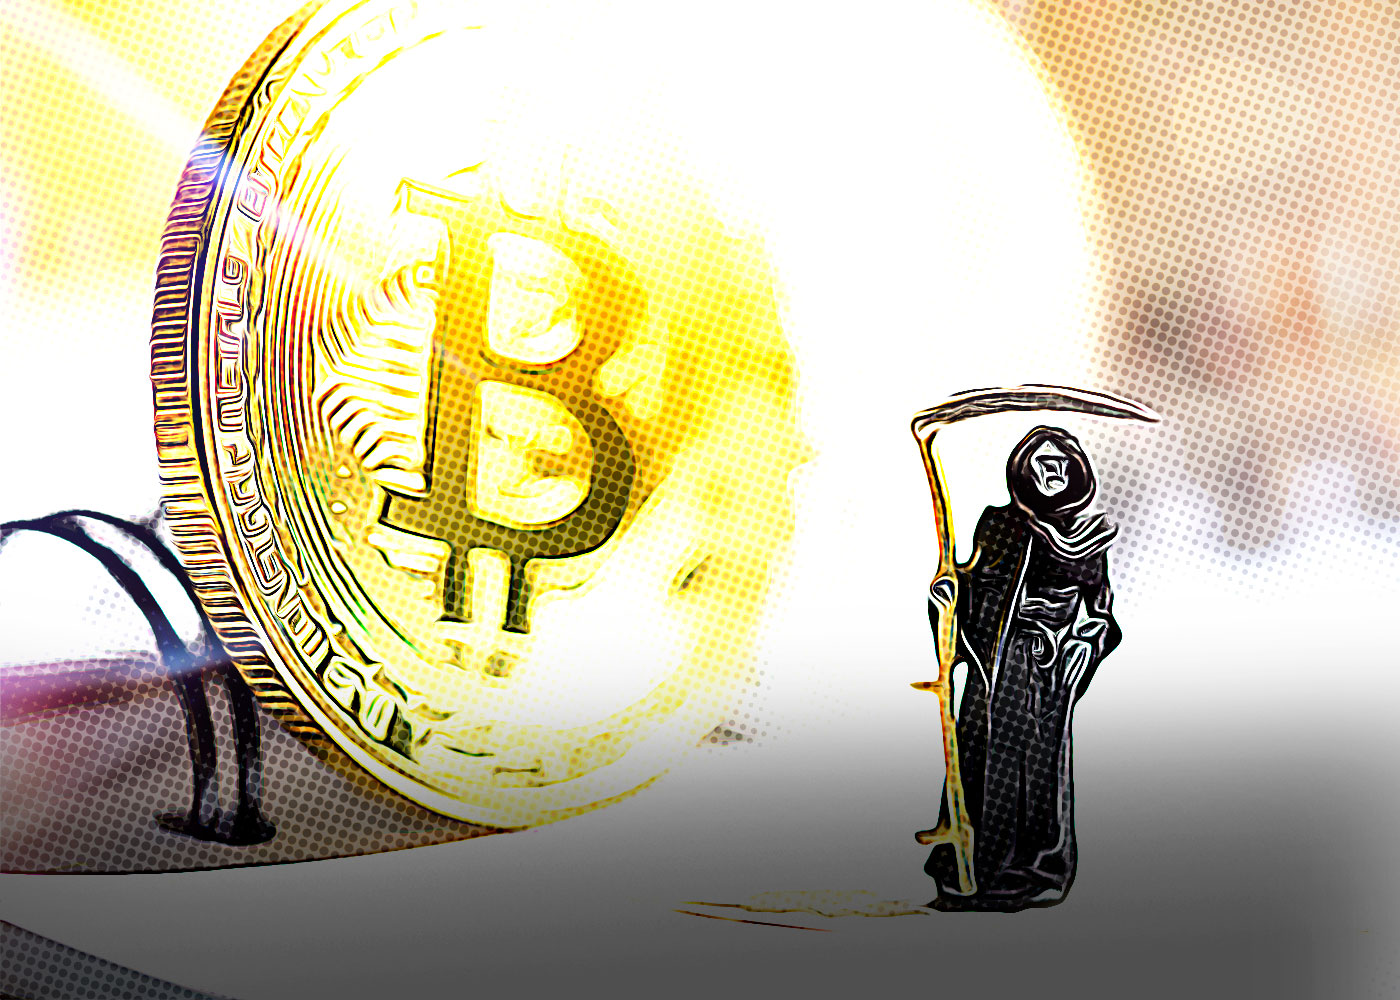 Fear Scenario In Bitcoin: Double Top Pattern